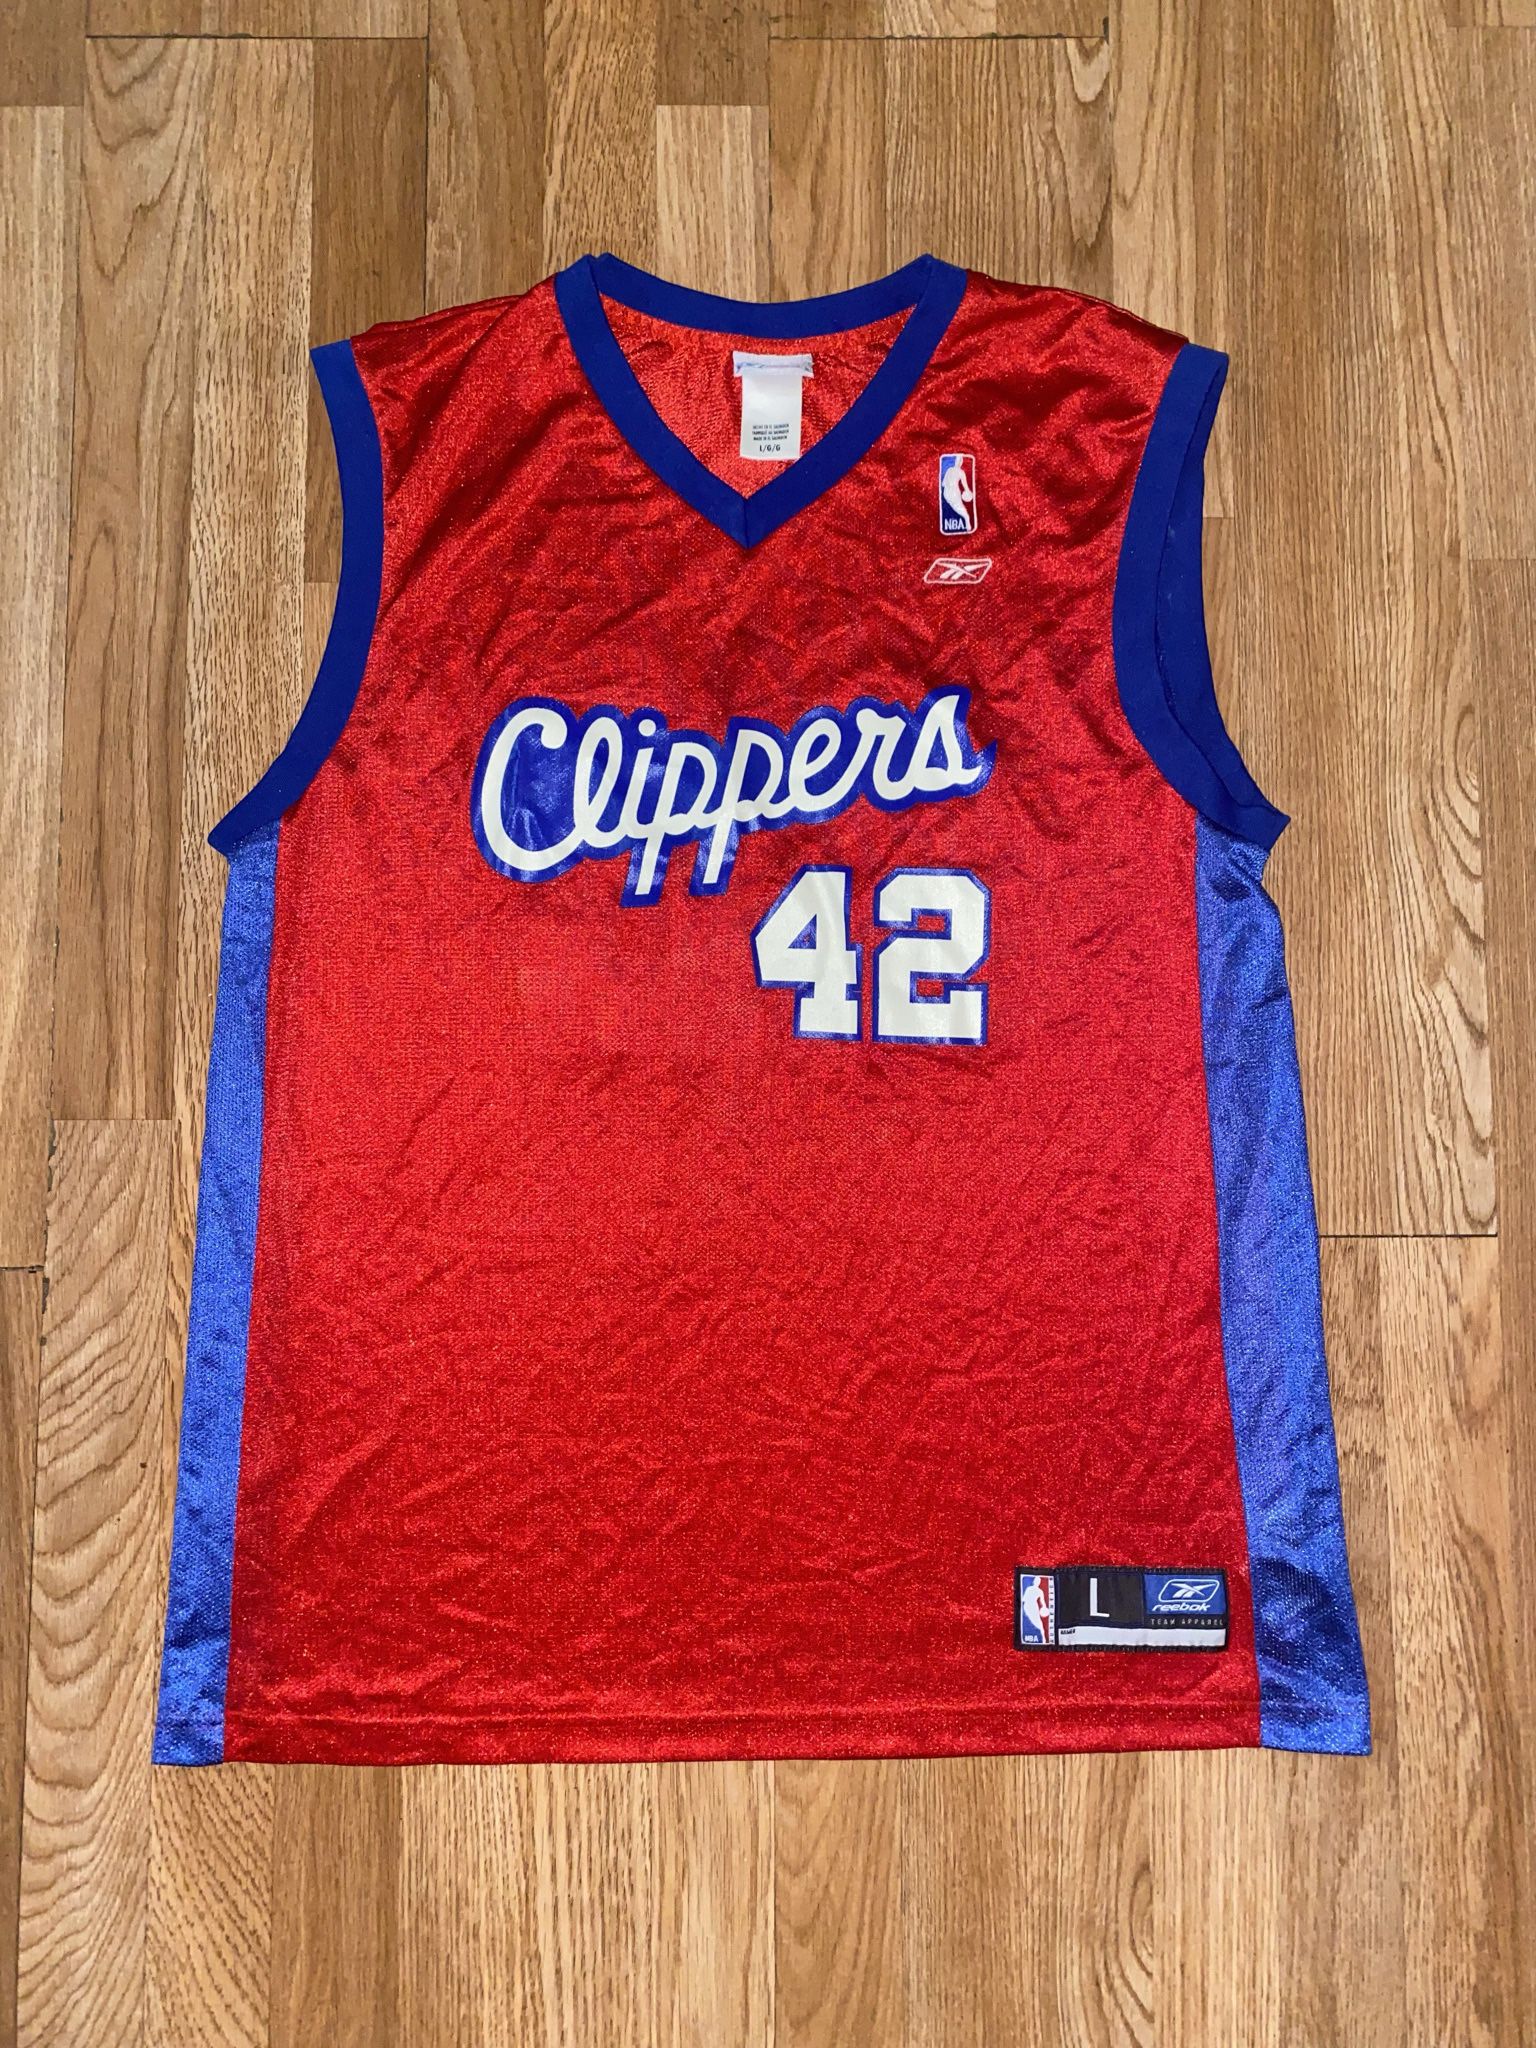 NBA Jerseys for sale in Los Angeles, California